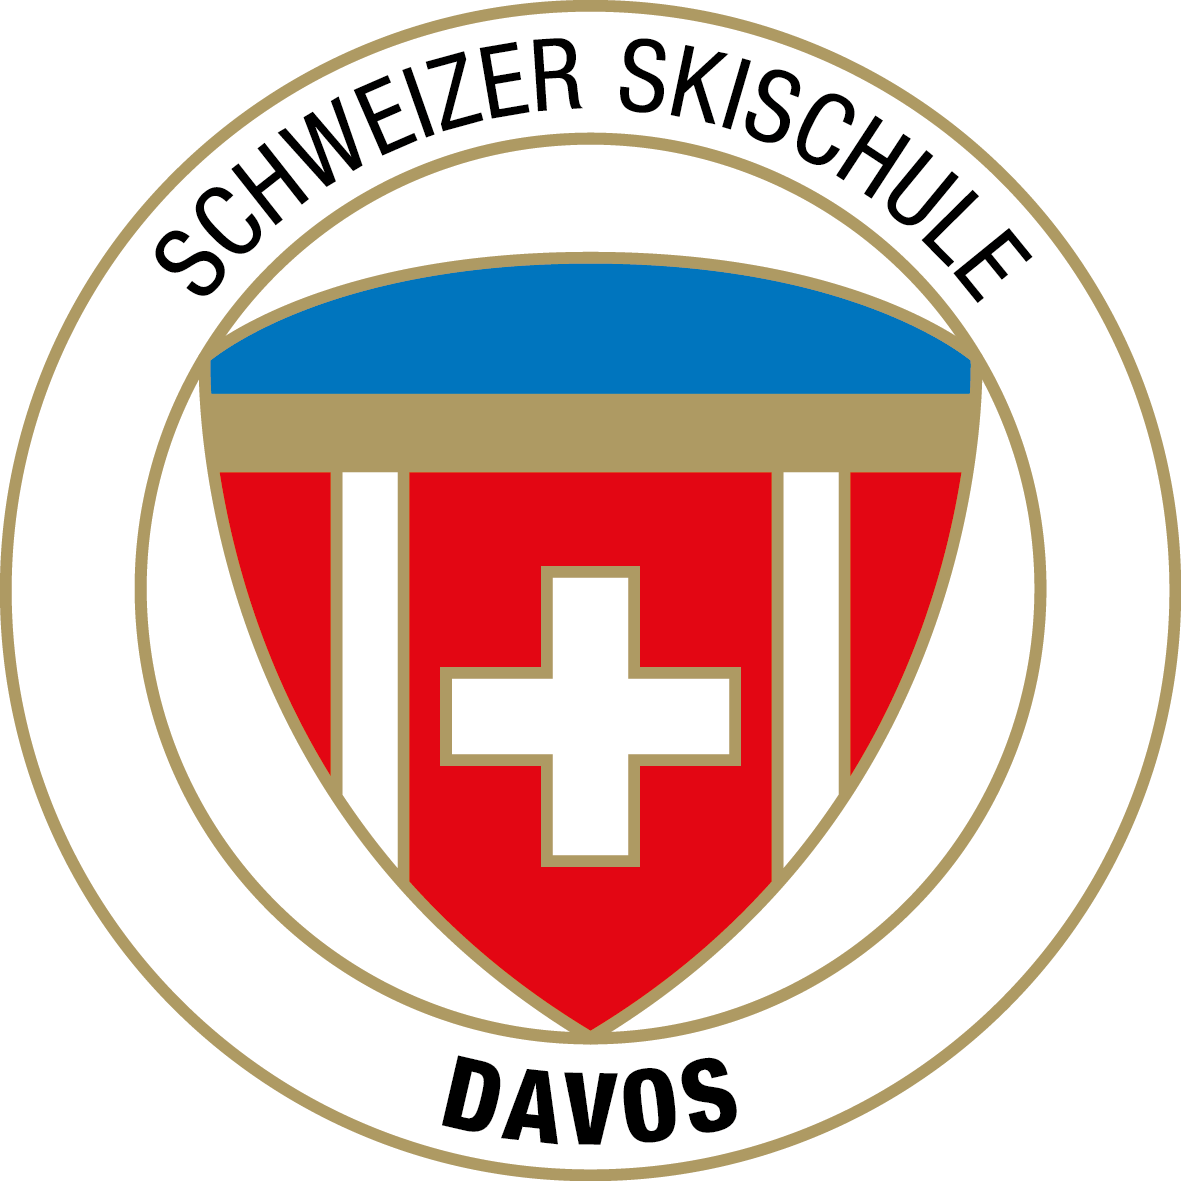 Swiss Ski School Davos